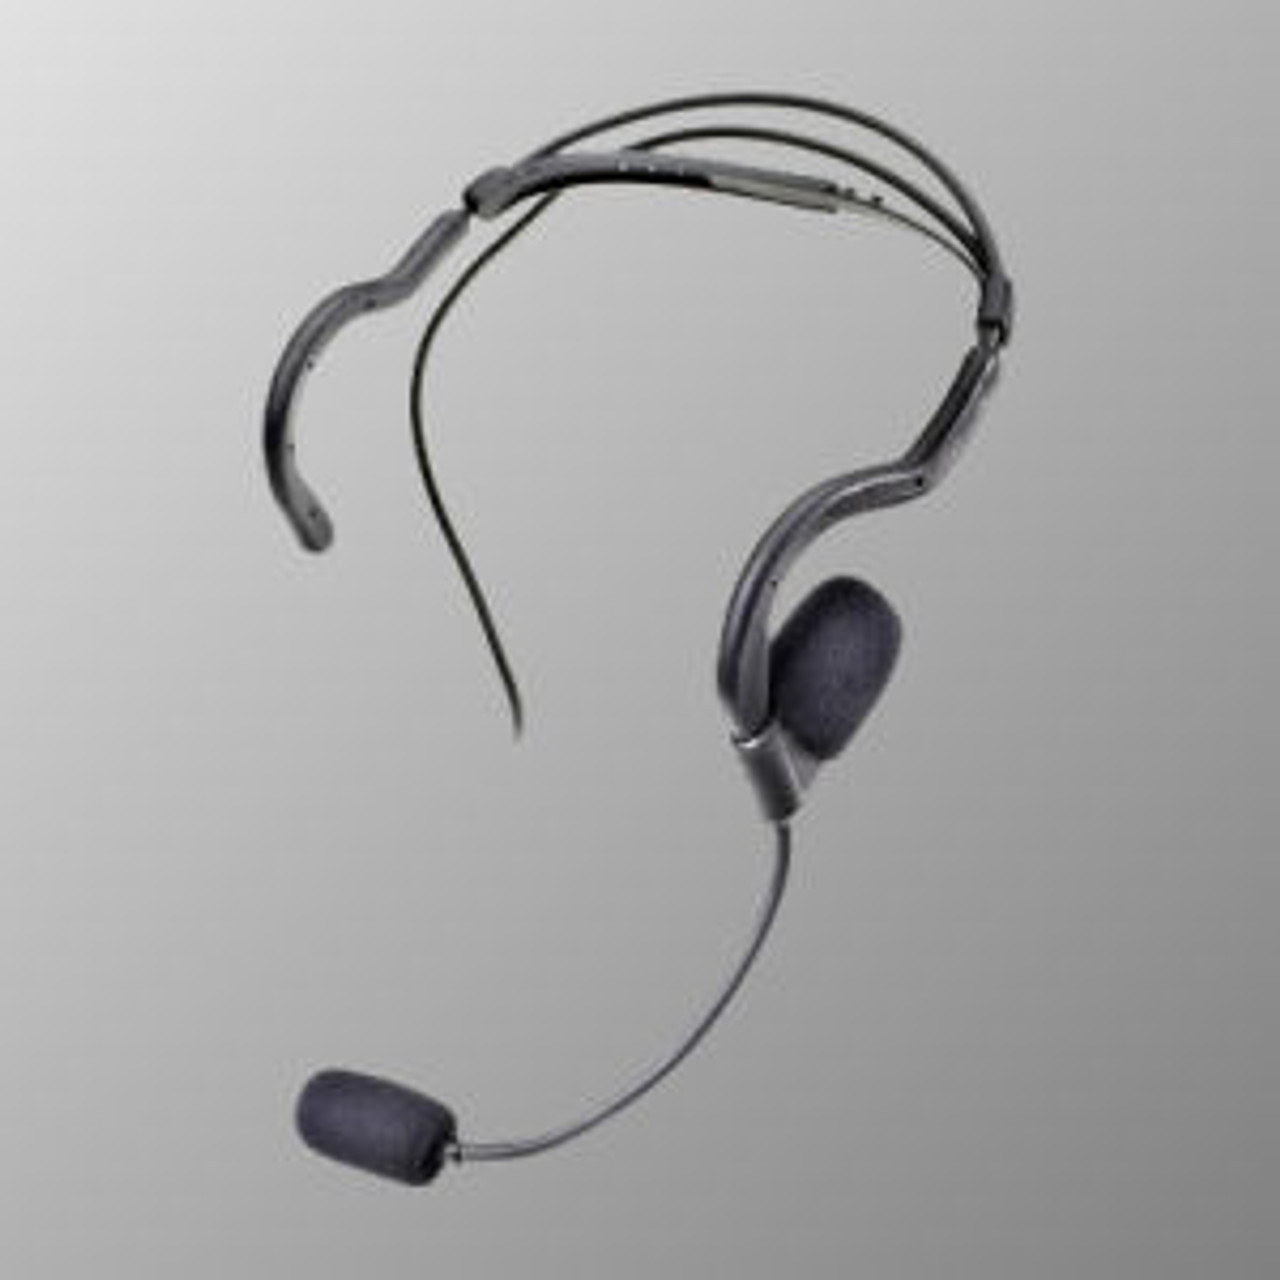 ICOM IC-F21 Tactical Noise Canceling Single Muff Headset